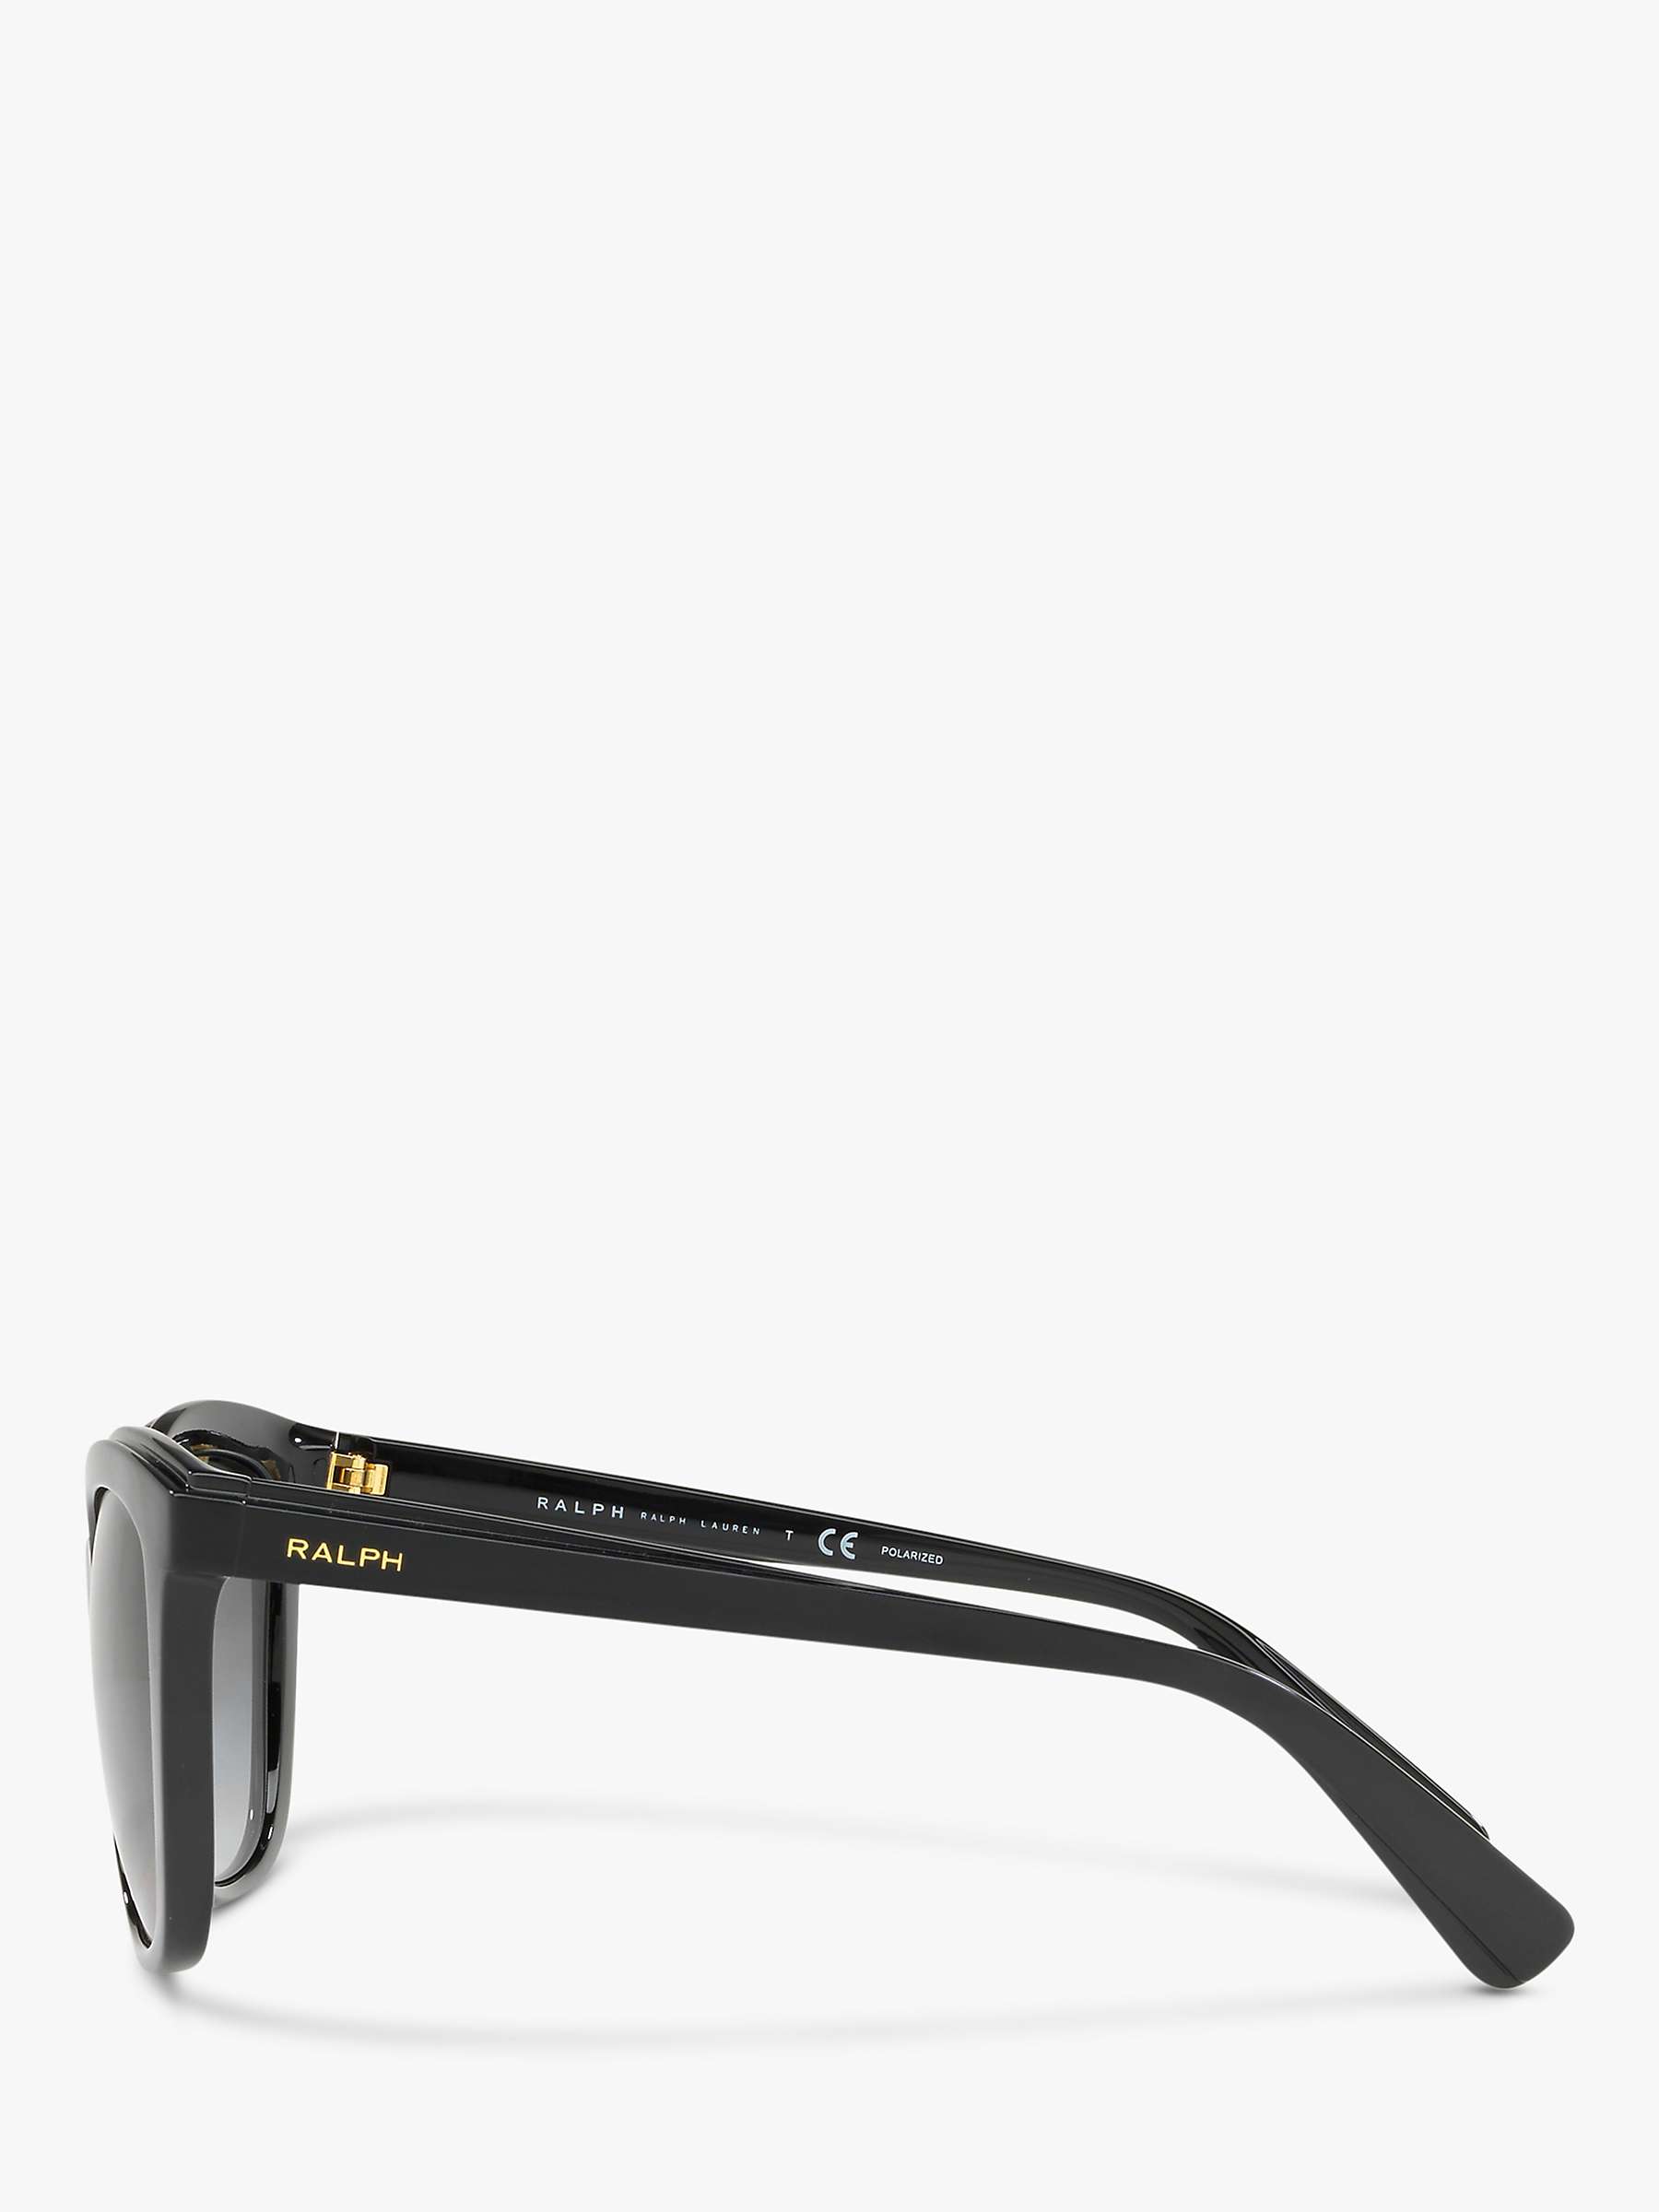 Buy Ralph RA5252 Women's Polarised Square Sunglasses, Black Online at johnlewis.com